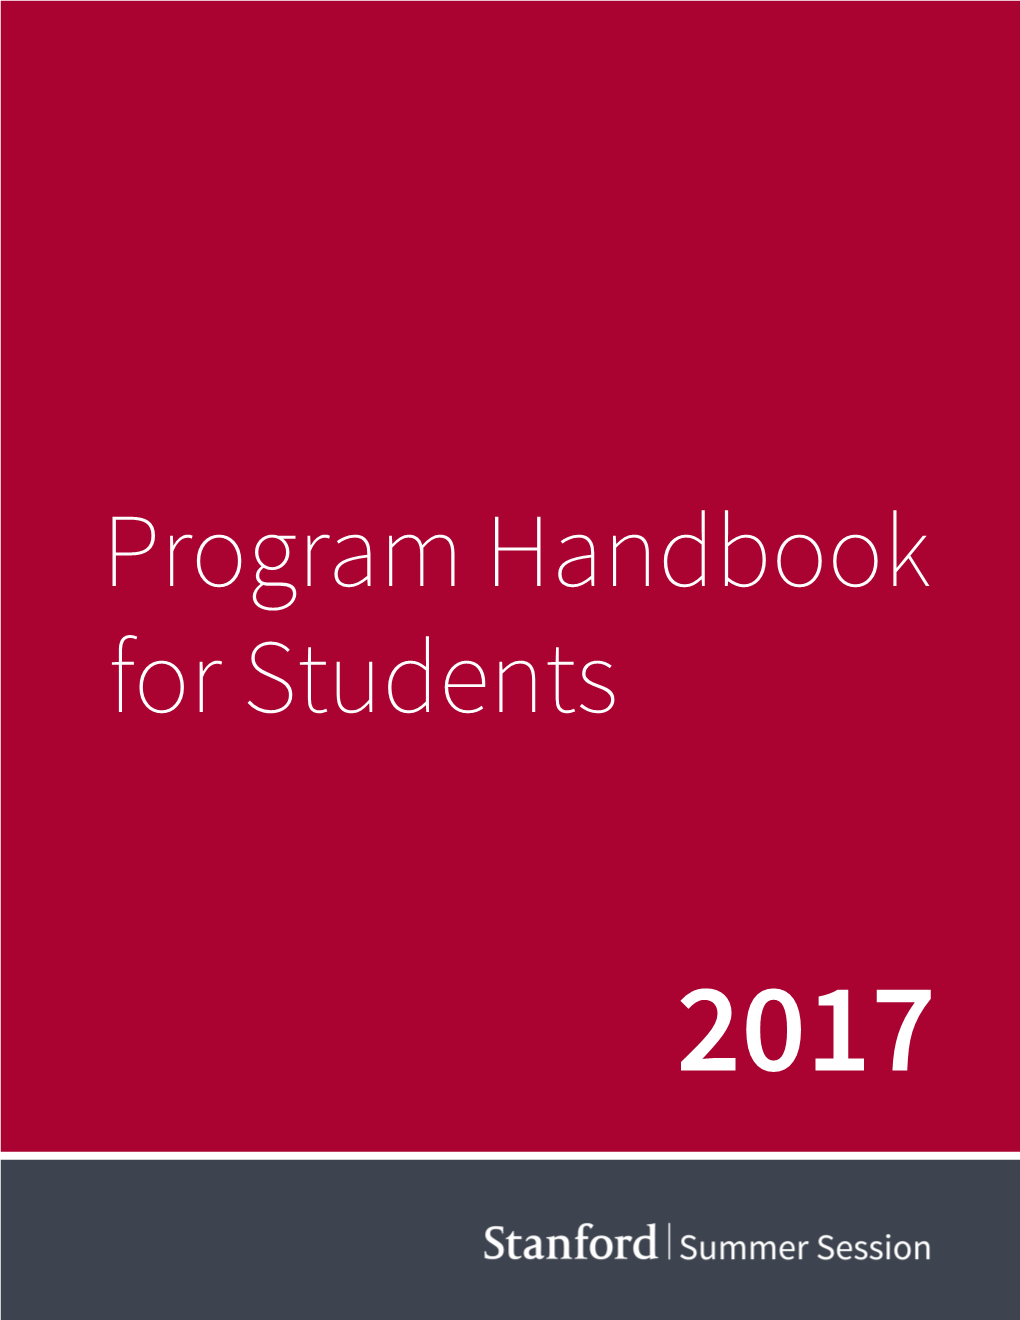 Program Handbook for Students